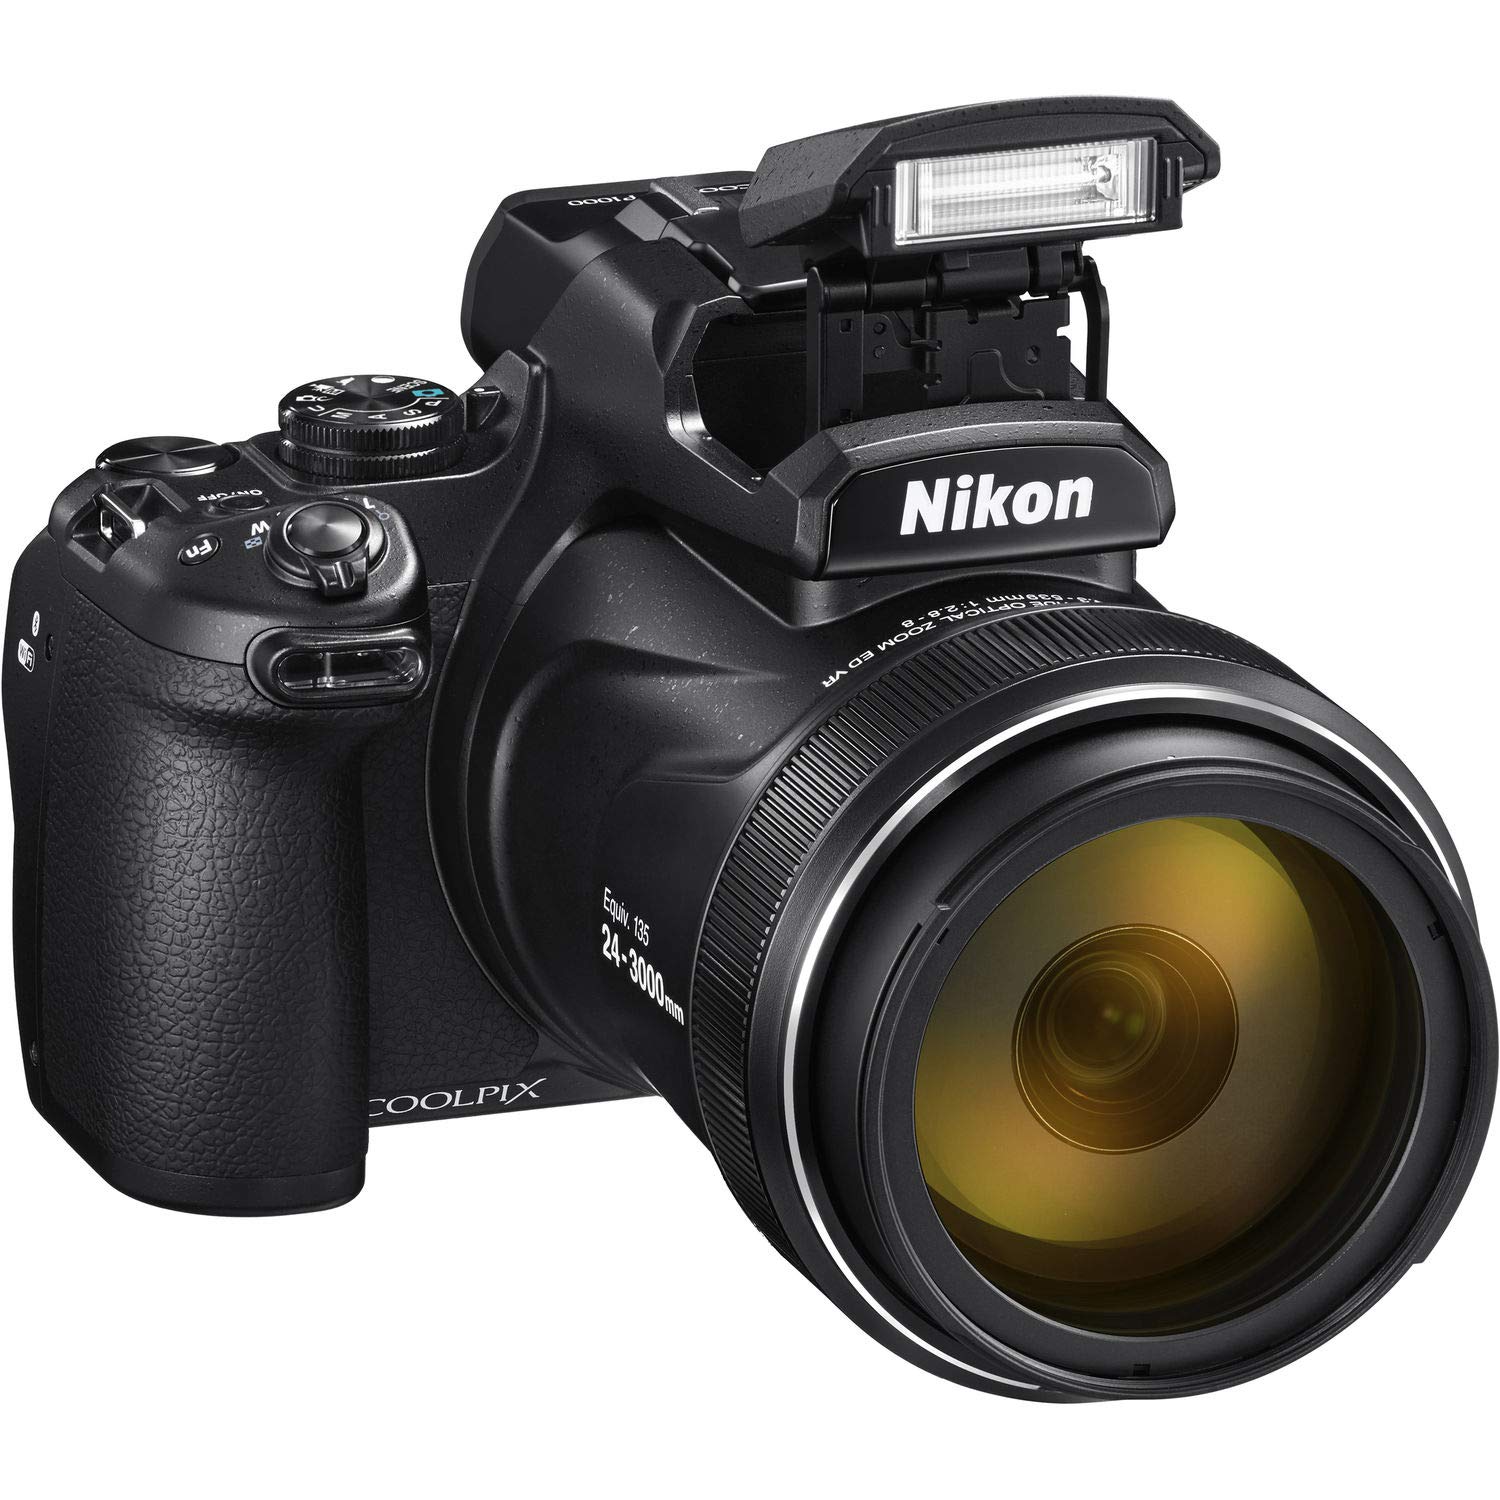 Nikon COOLPIX P1000 Digital Camera + 64GB Sandisk Extreme Memory Card Base Bundle International Model